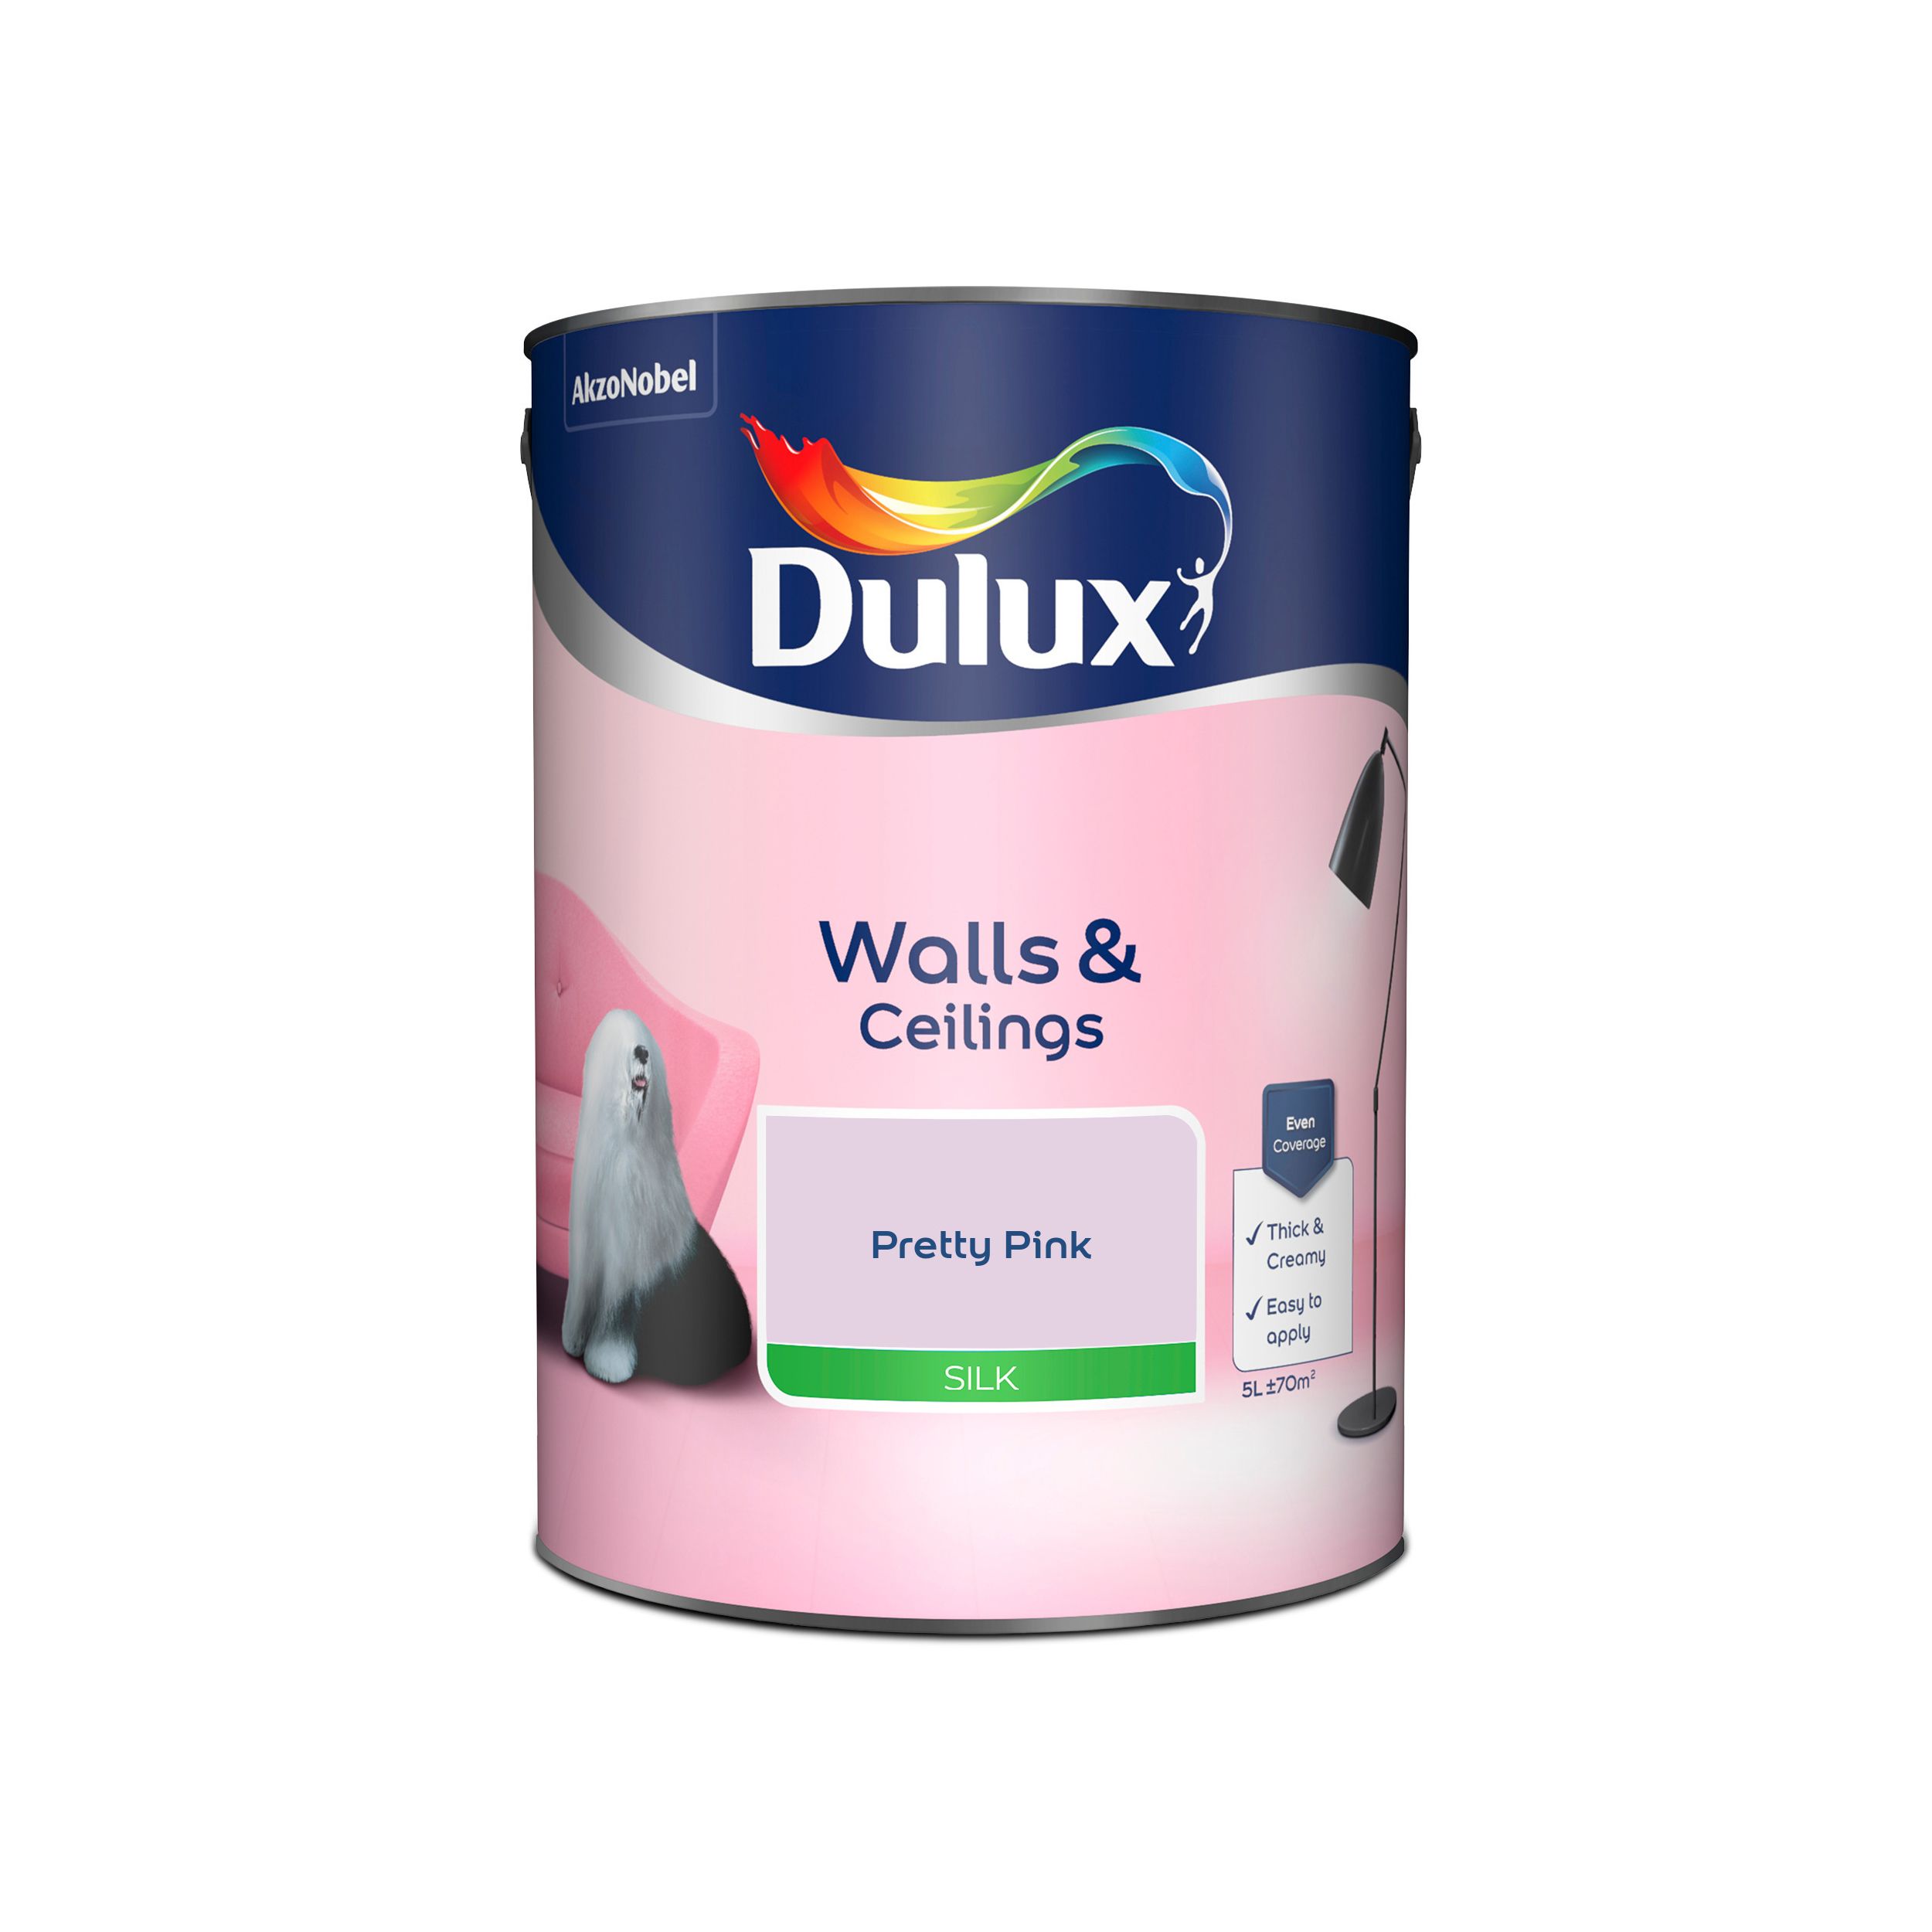 Dulux Walls & ceilings Pretty pink Silk Emulsion paint, 5L